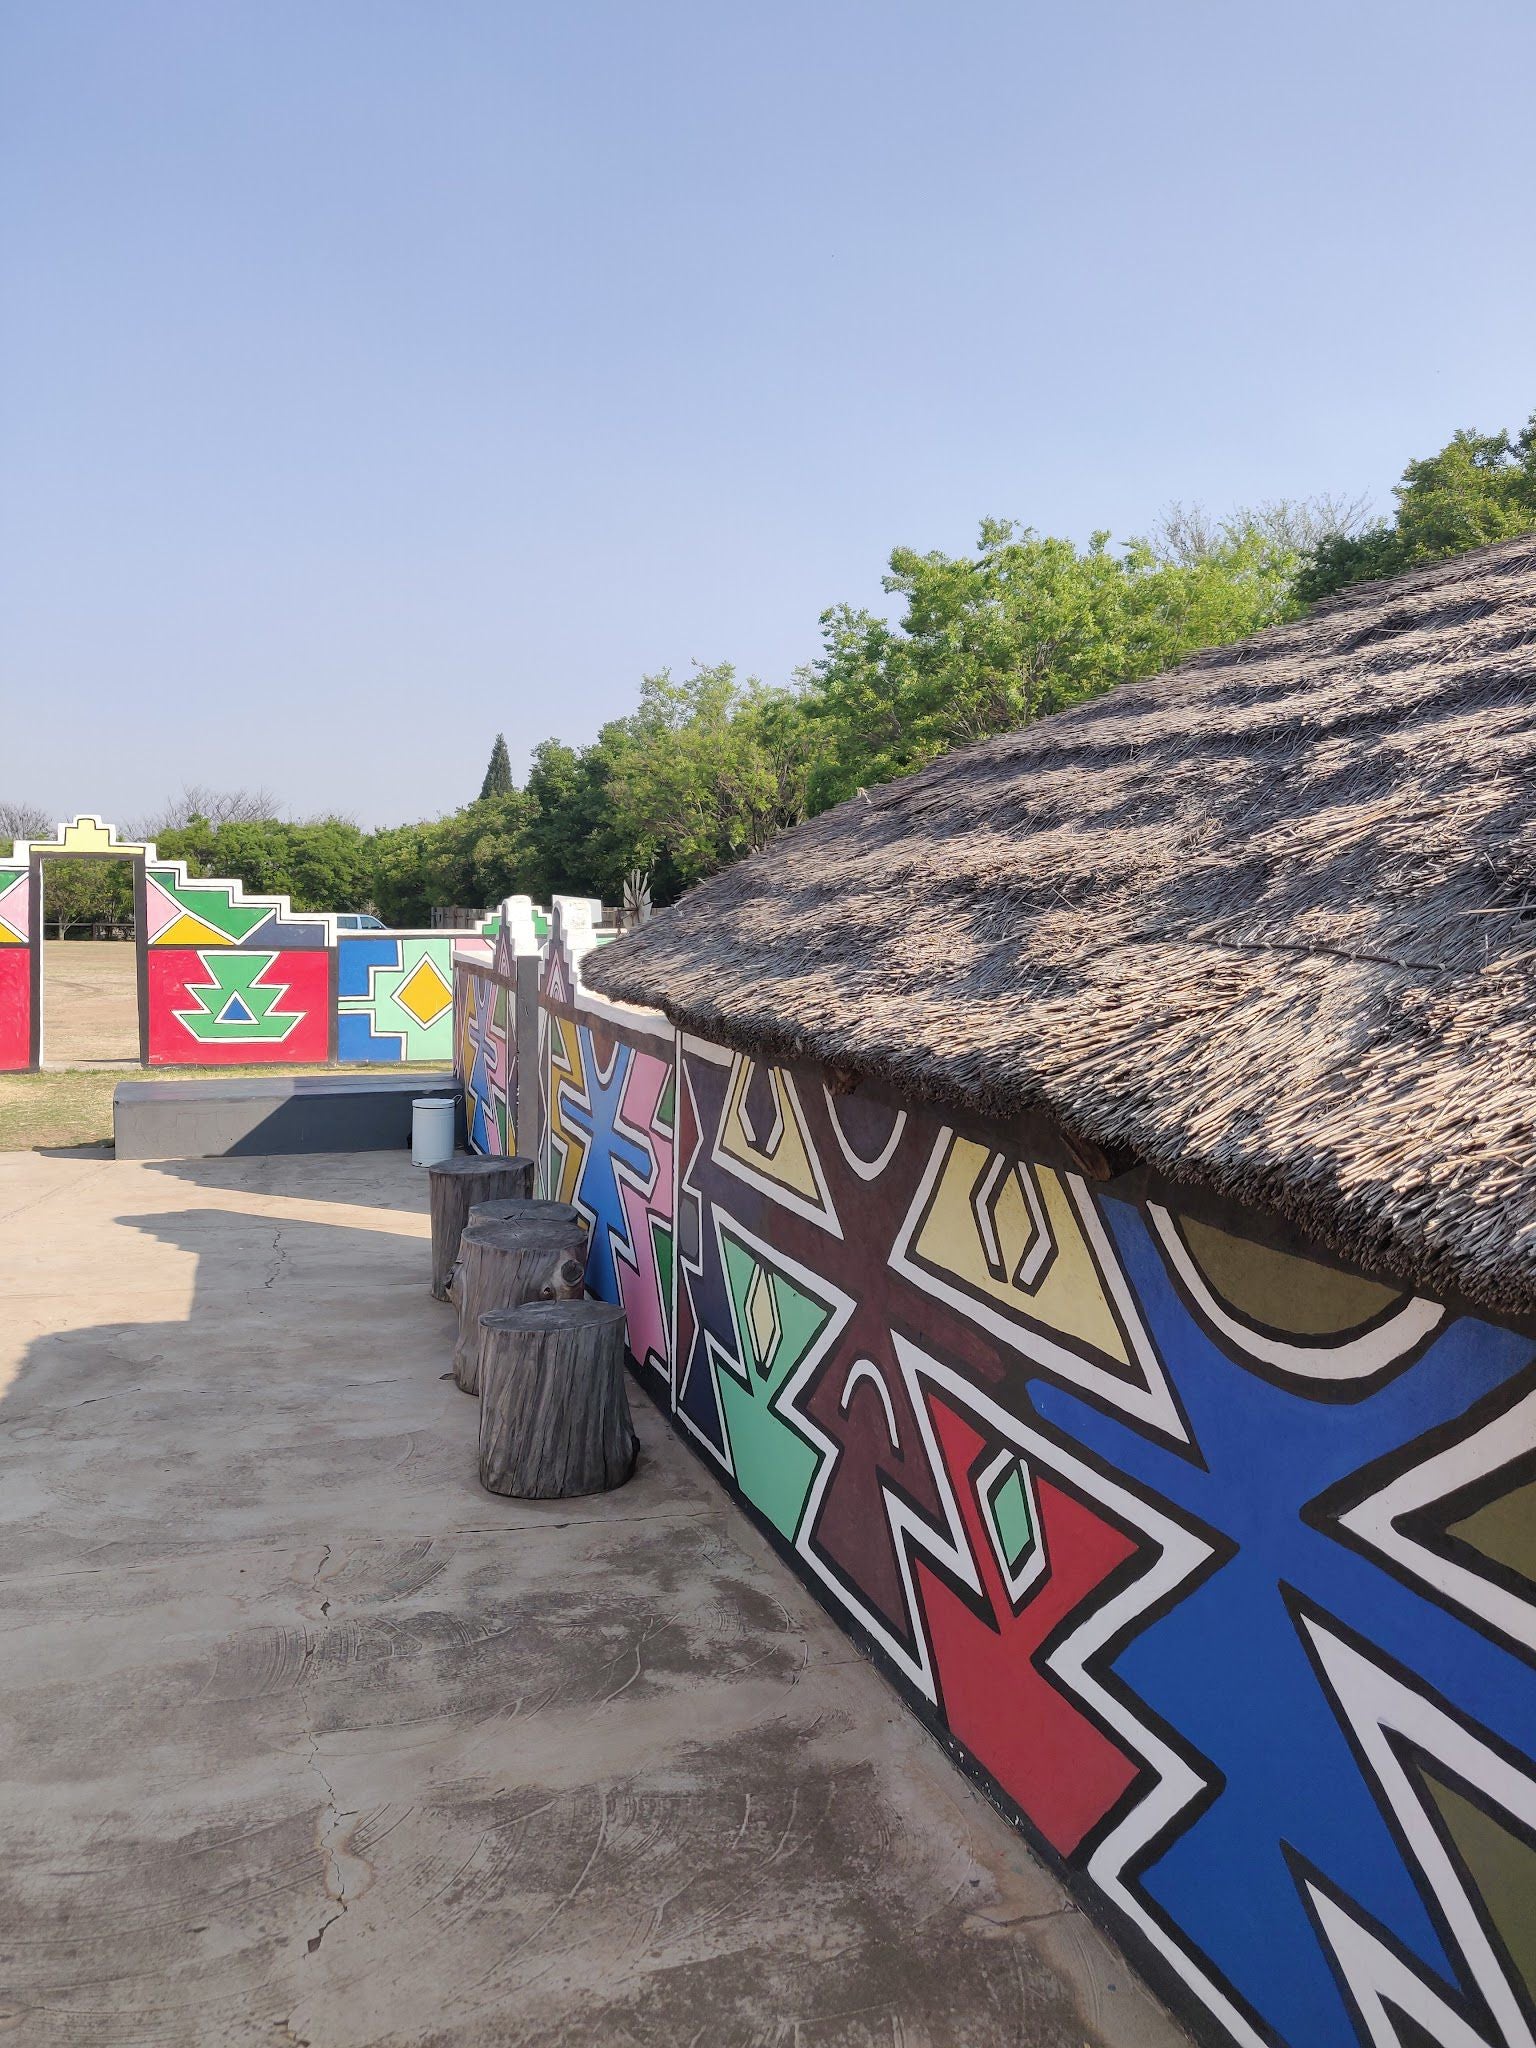  Ndebele Cultural Village